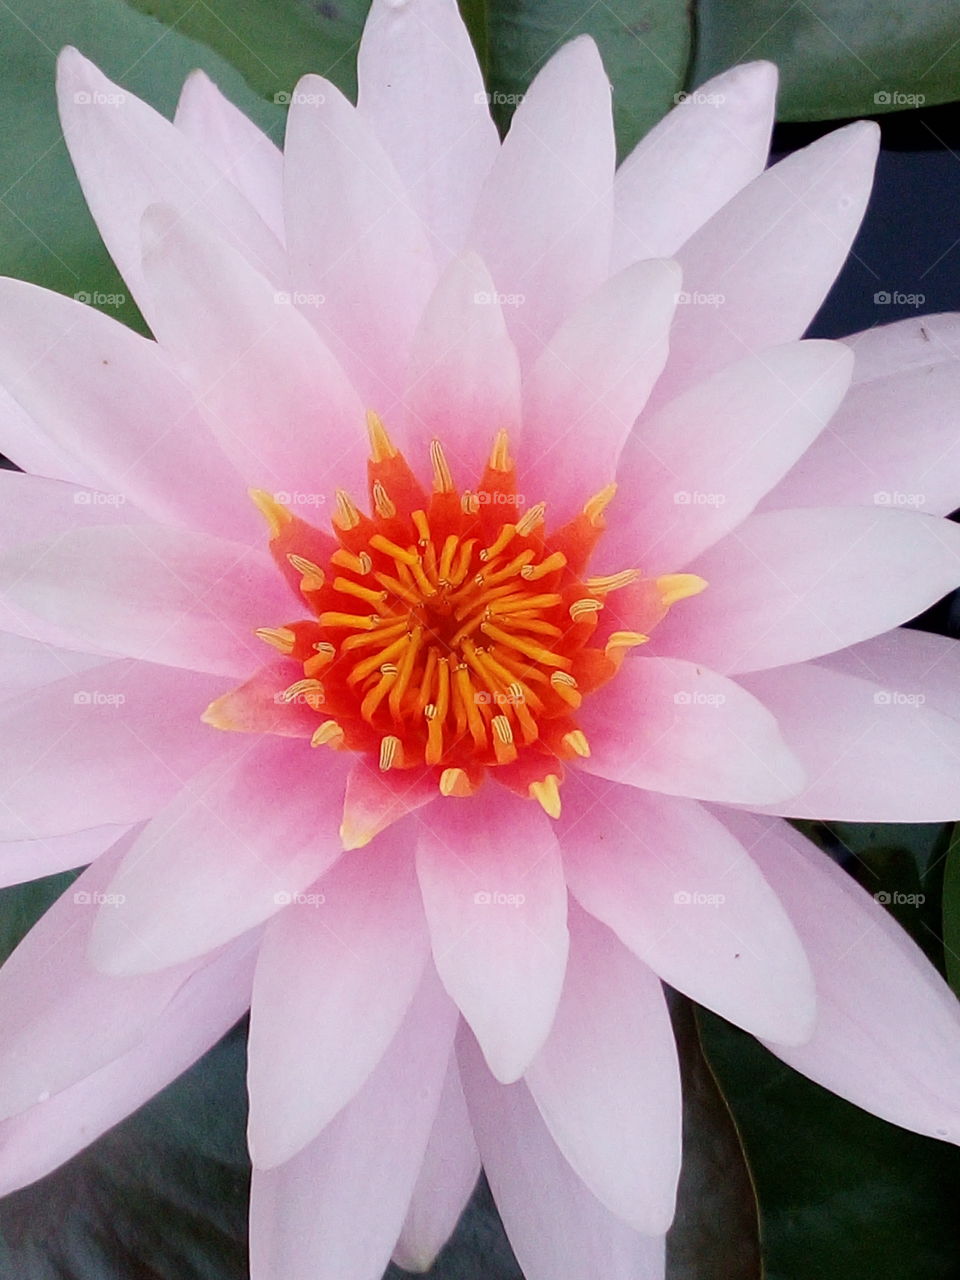 lotus Flower beautiful nature